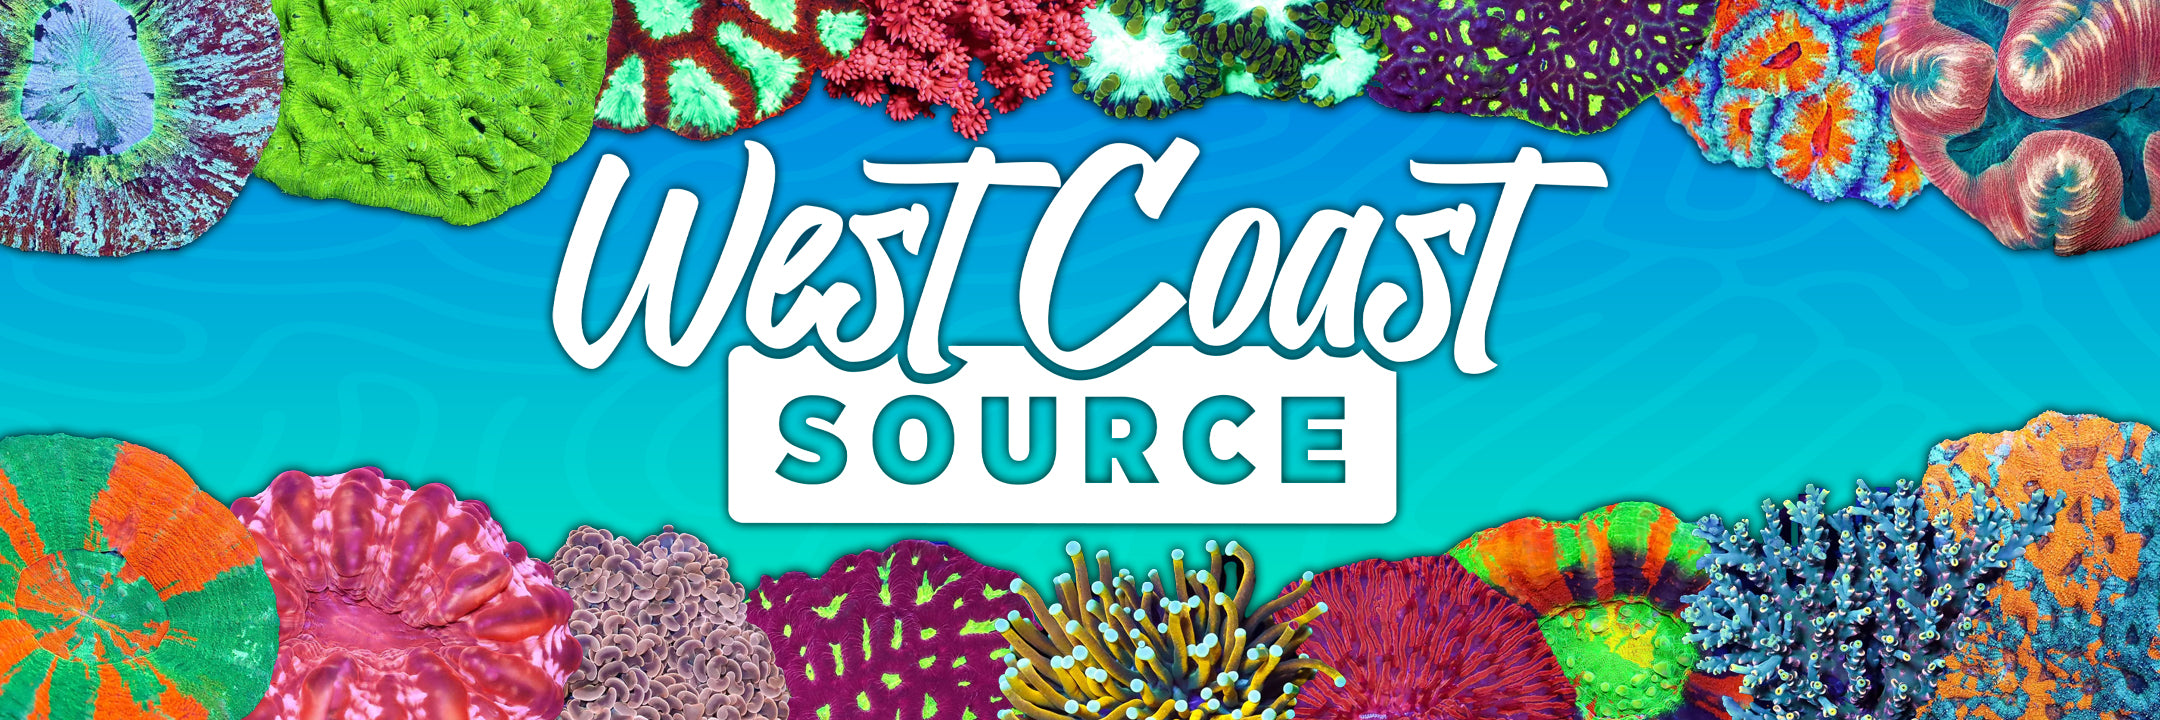 West Coast Source